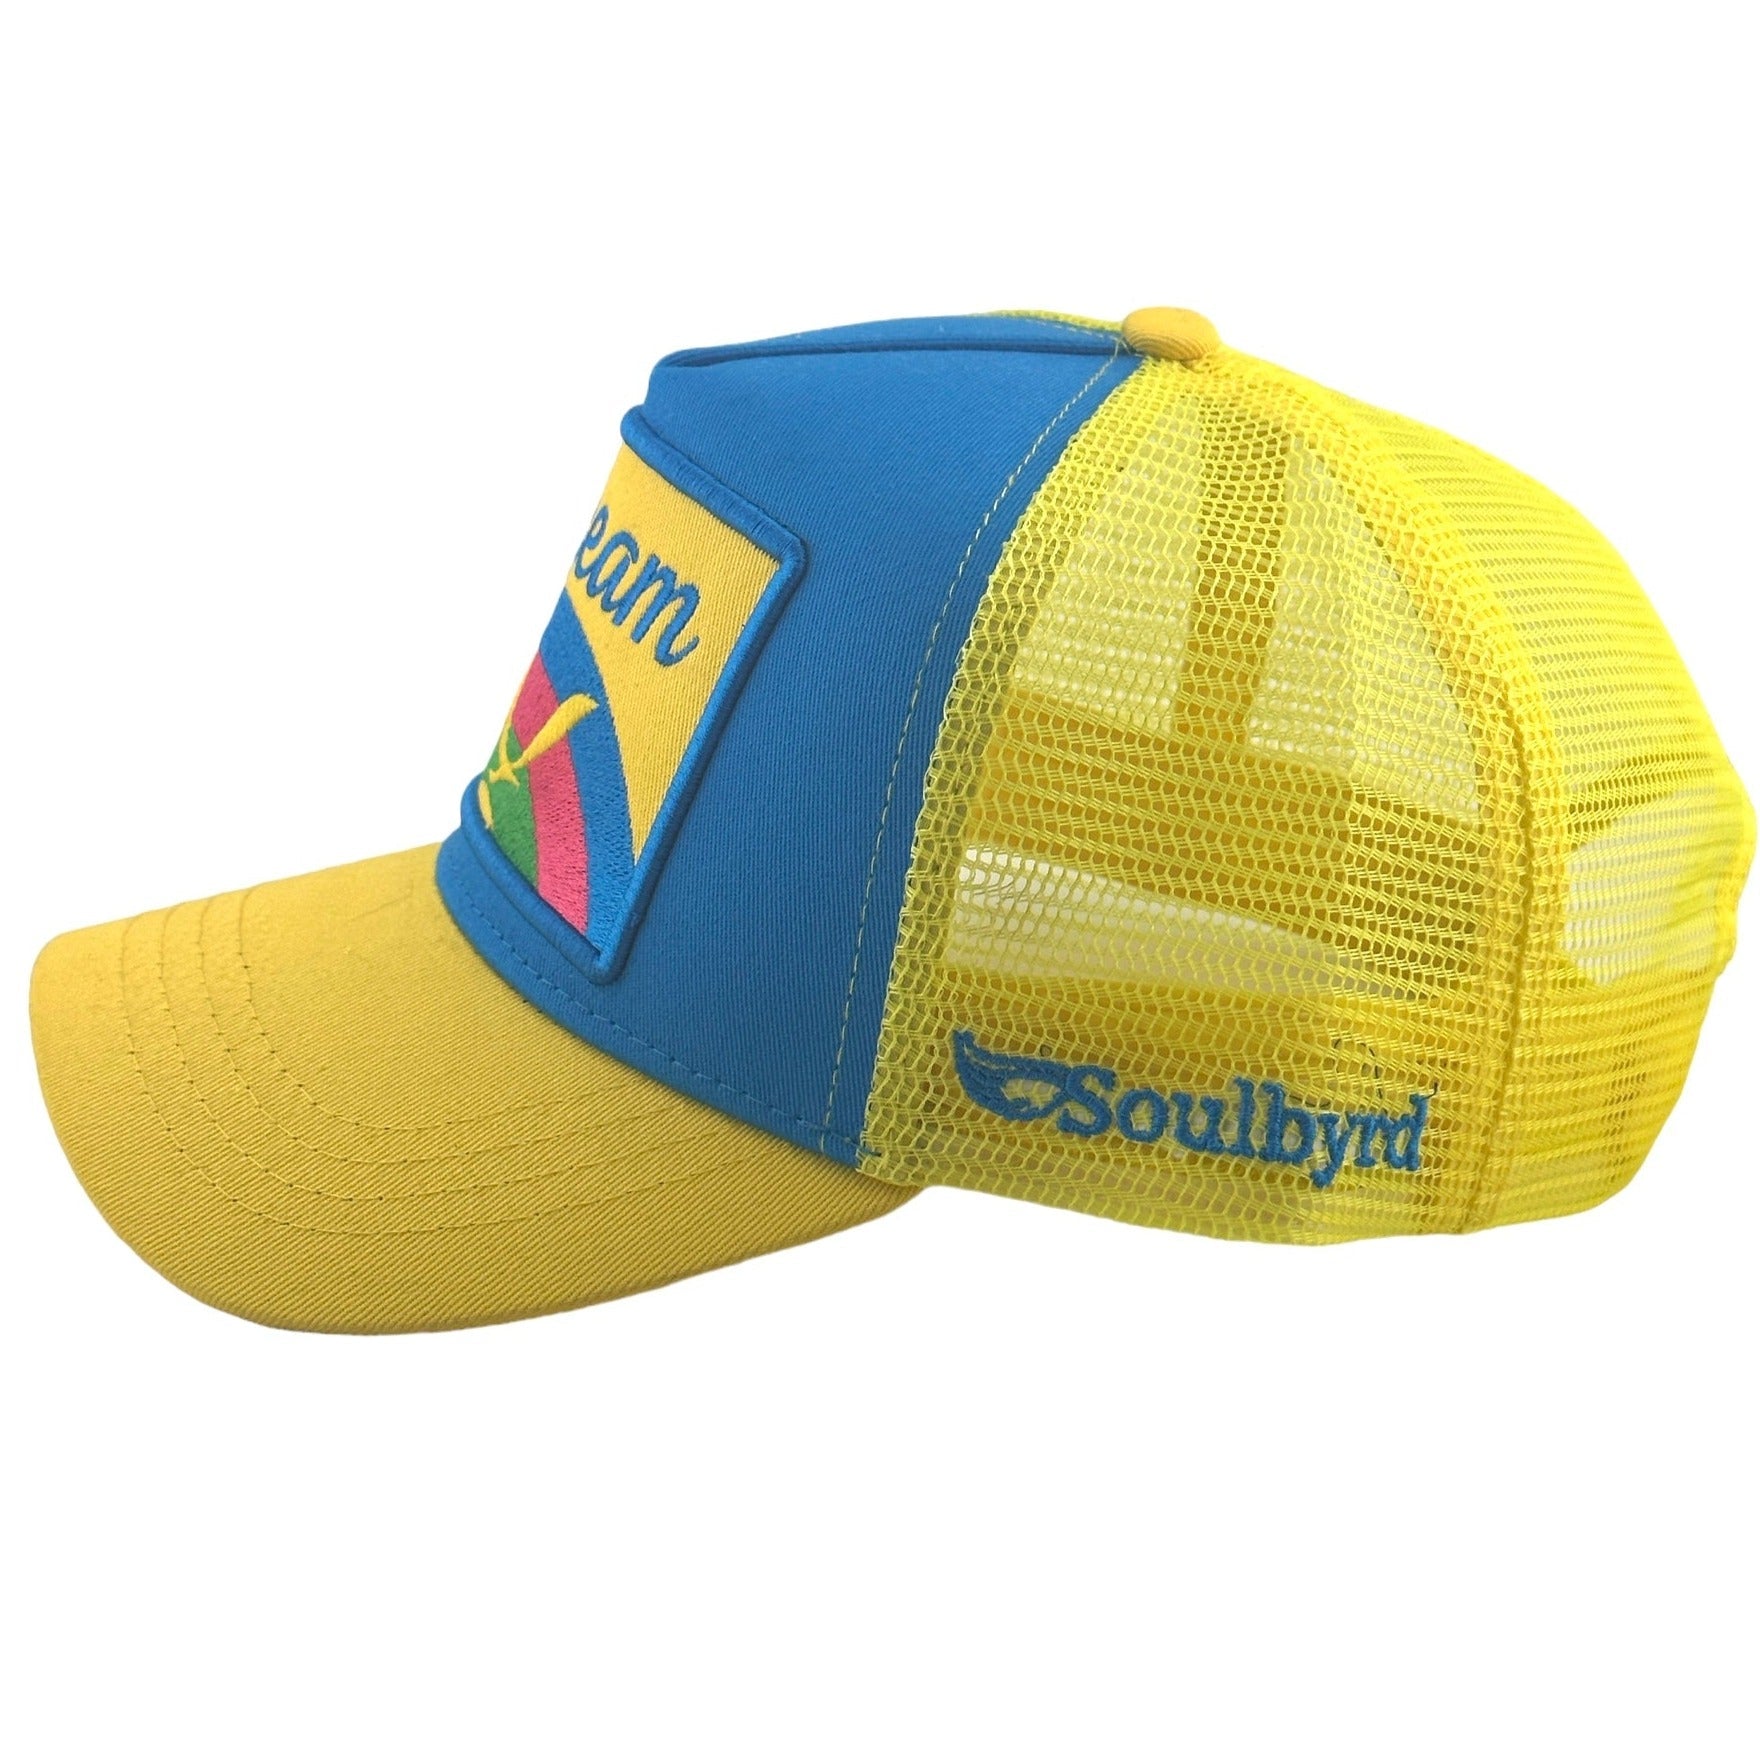 Shop All Hats | Soulbyrd